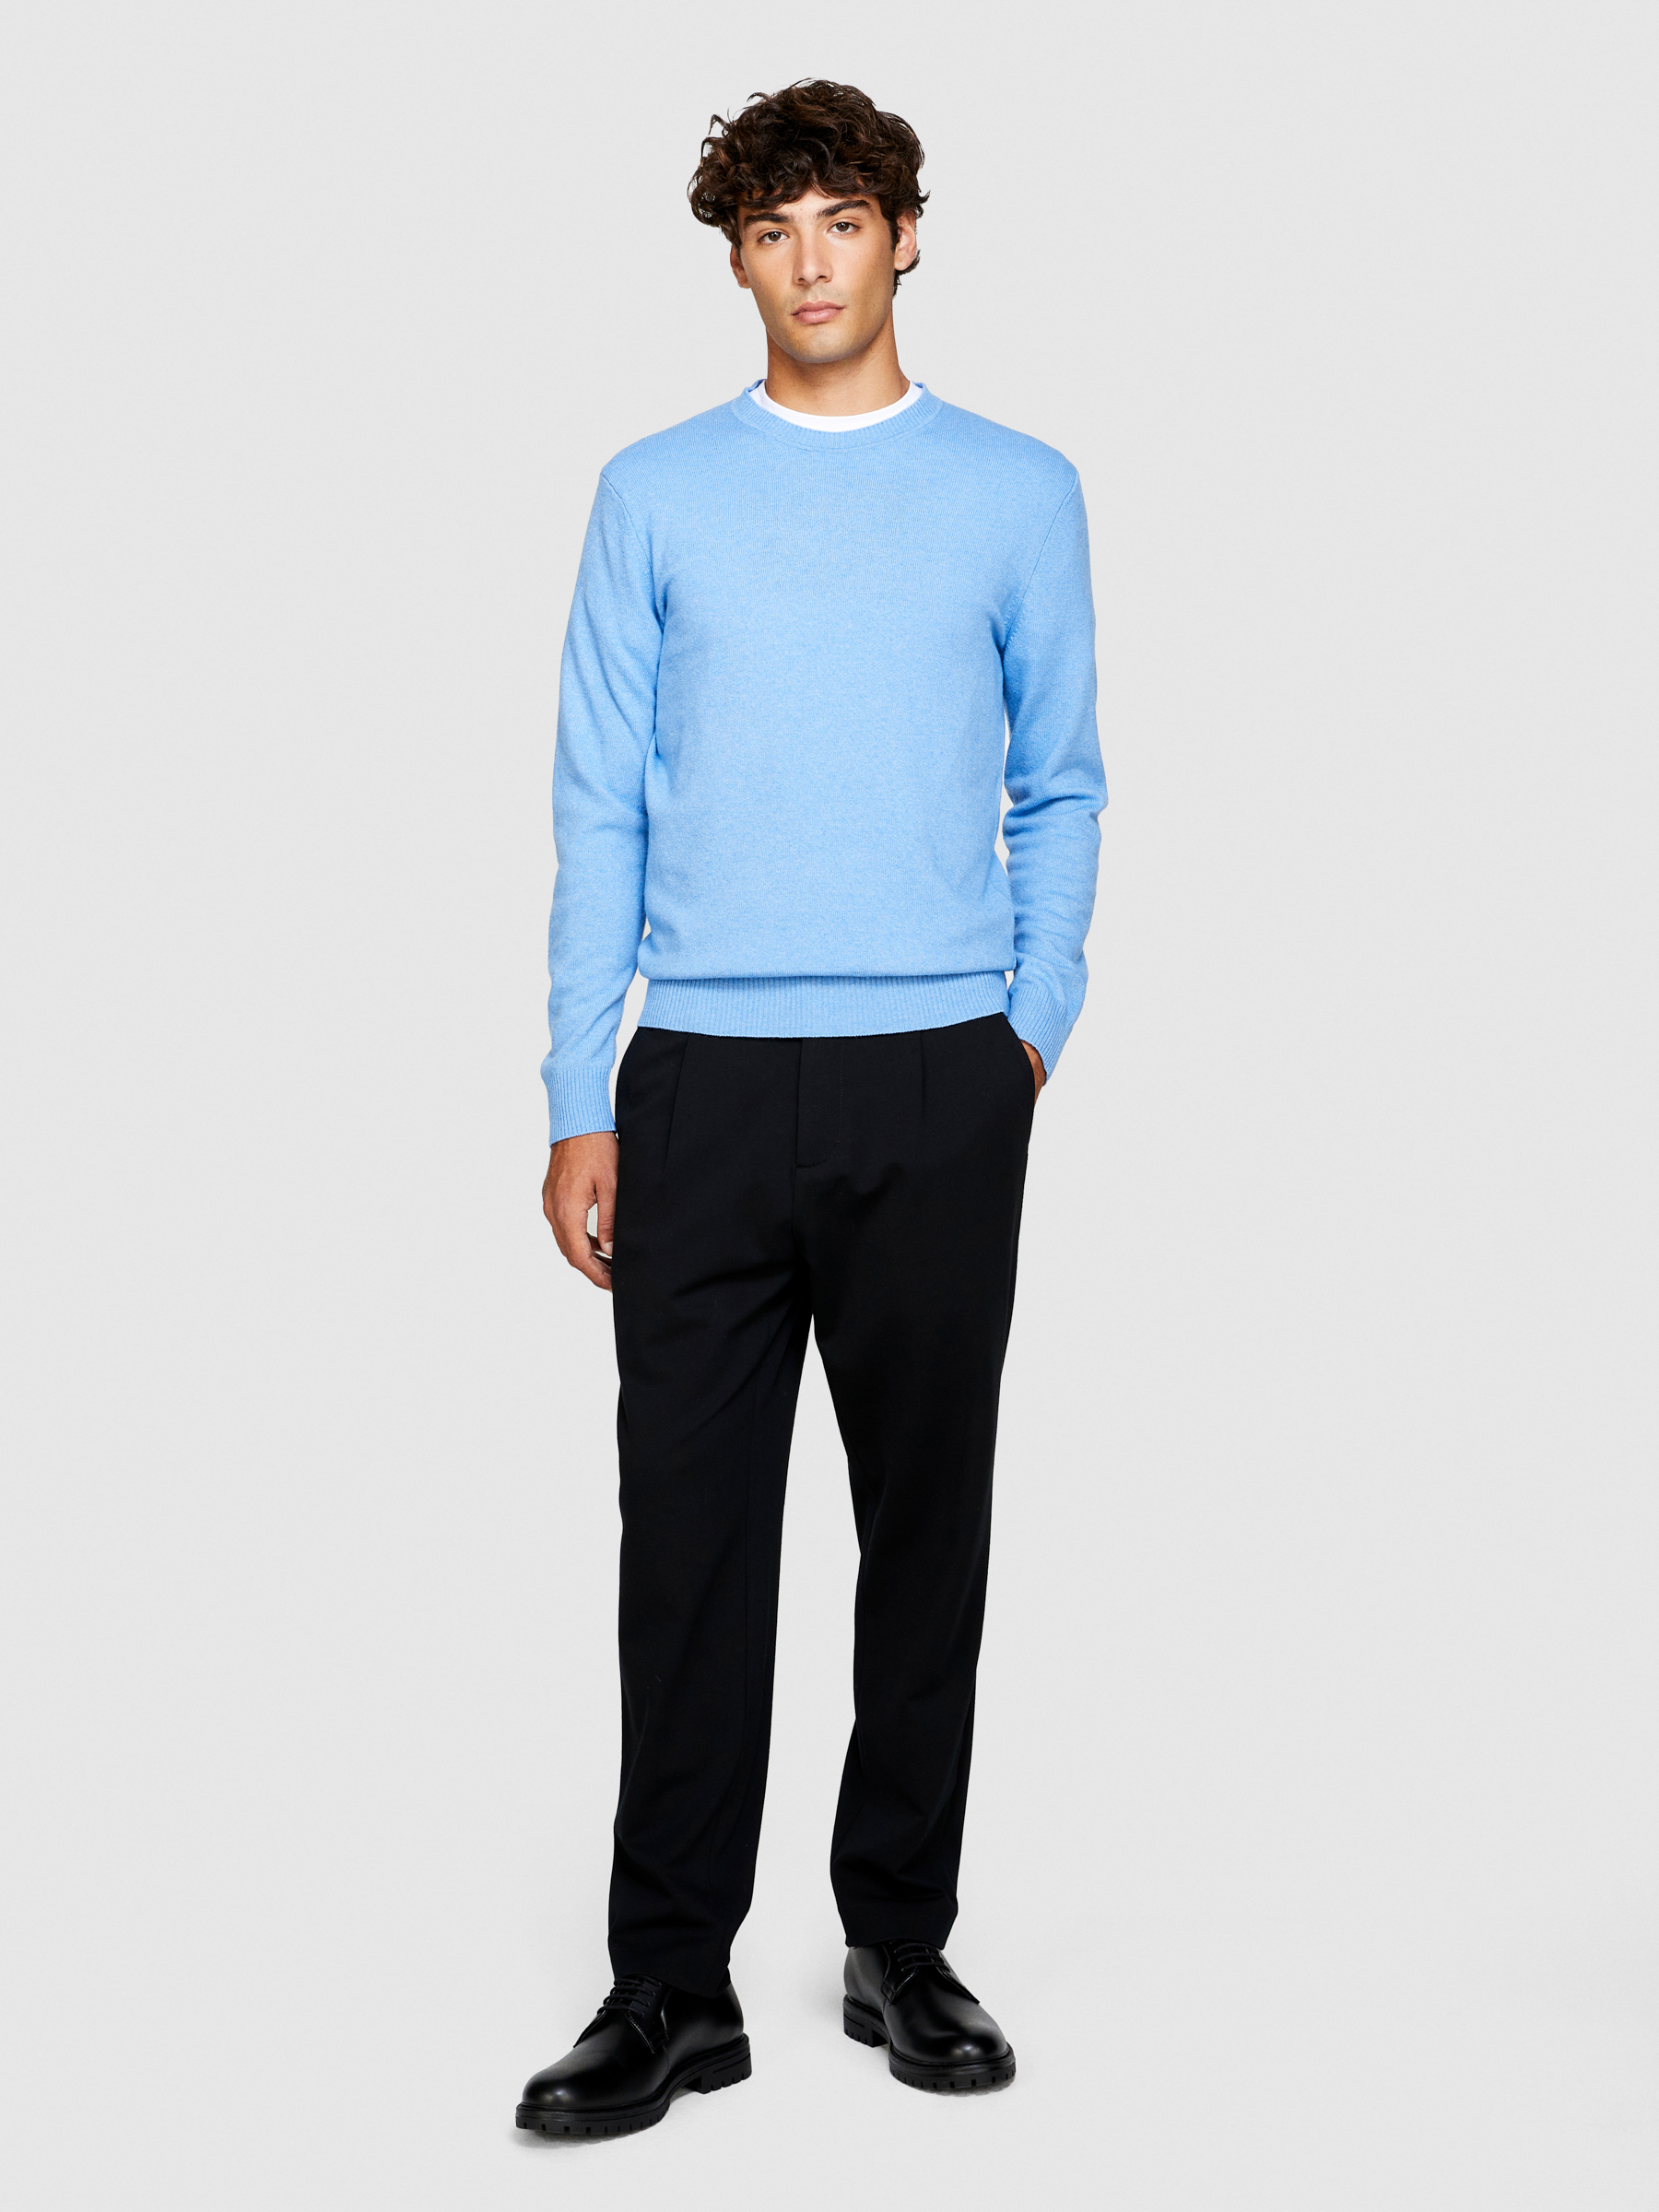 Sisley - Crew Neck Sweater, Man, Sky Blue, Size: XL